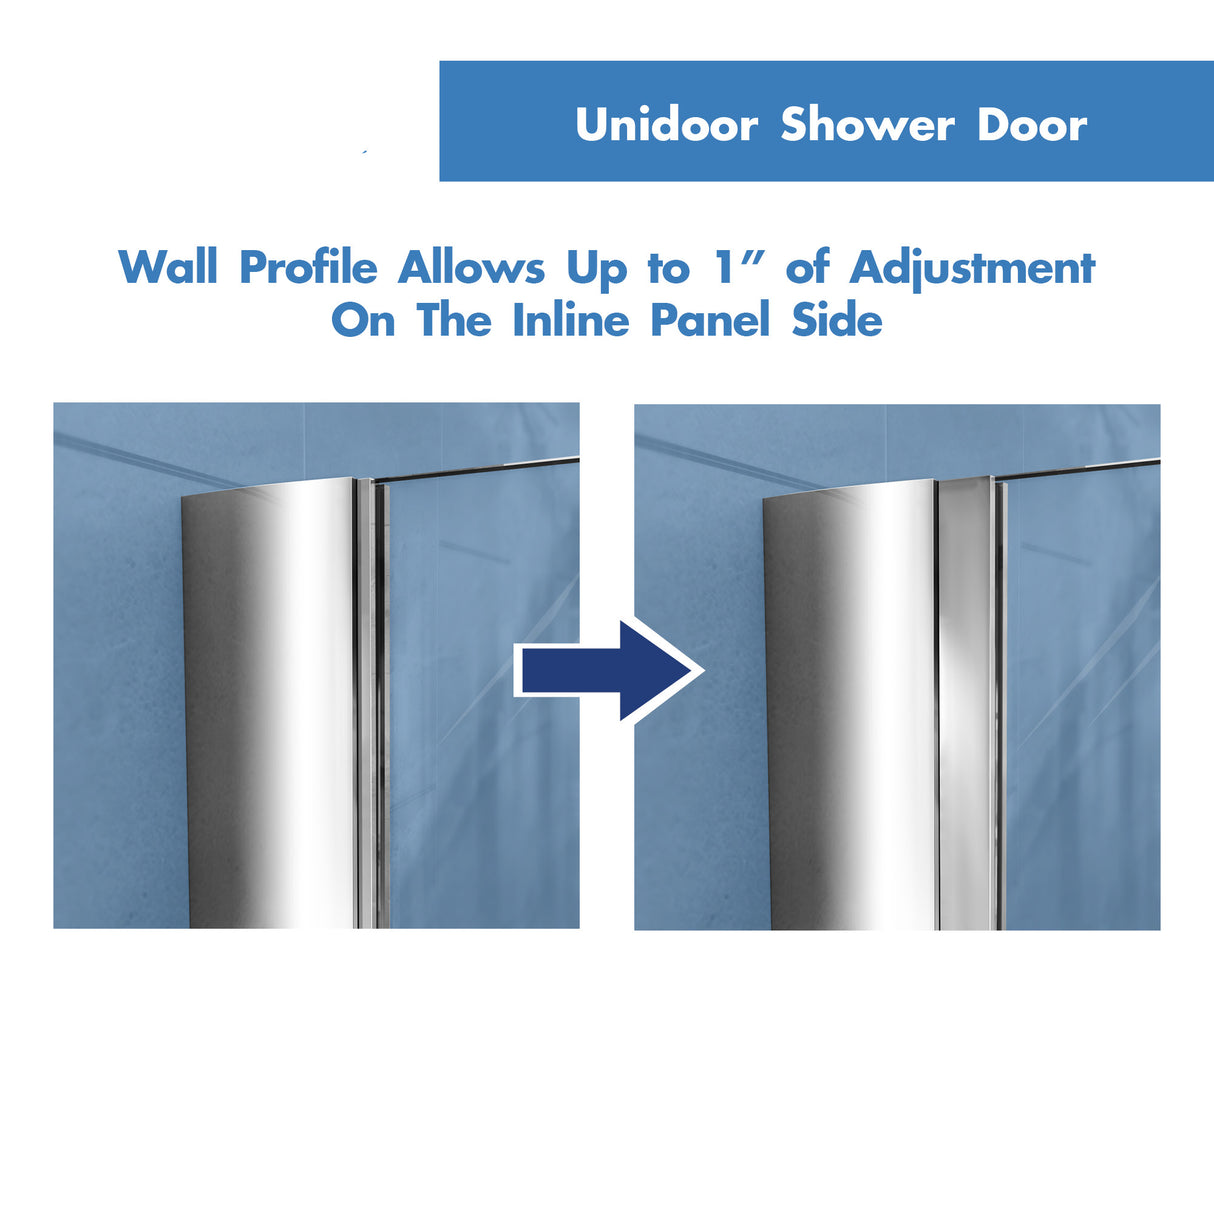 DreamLine Unidoor 45-46 in. W x 72 in. H Frameless Hinged Shower Door with Shelves in Chrome